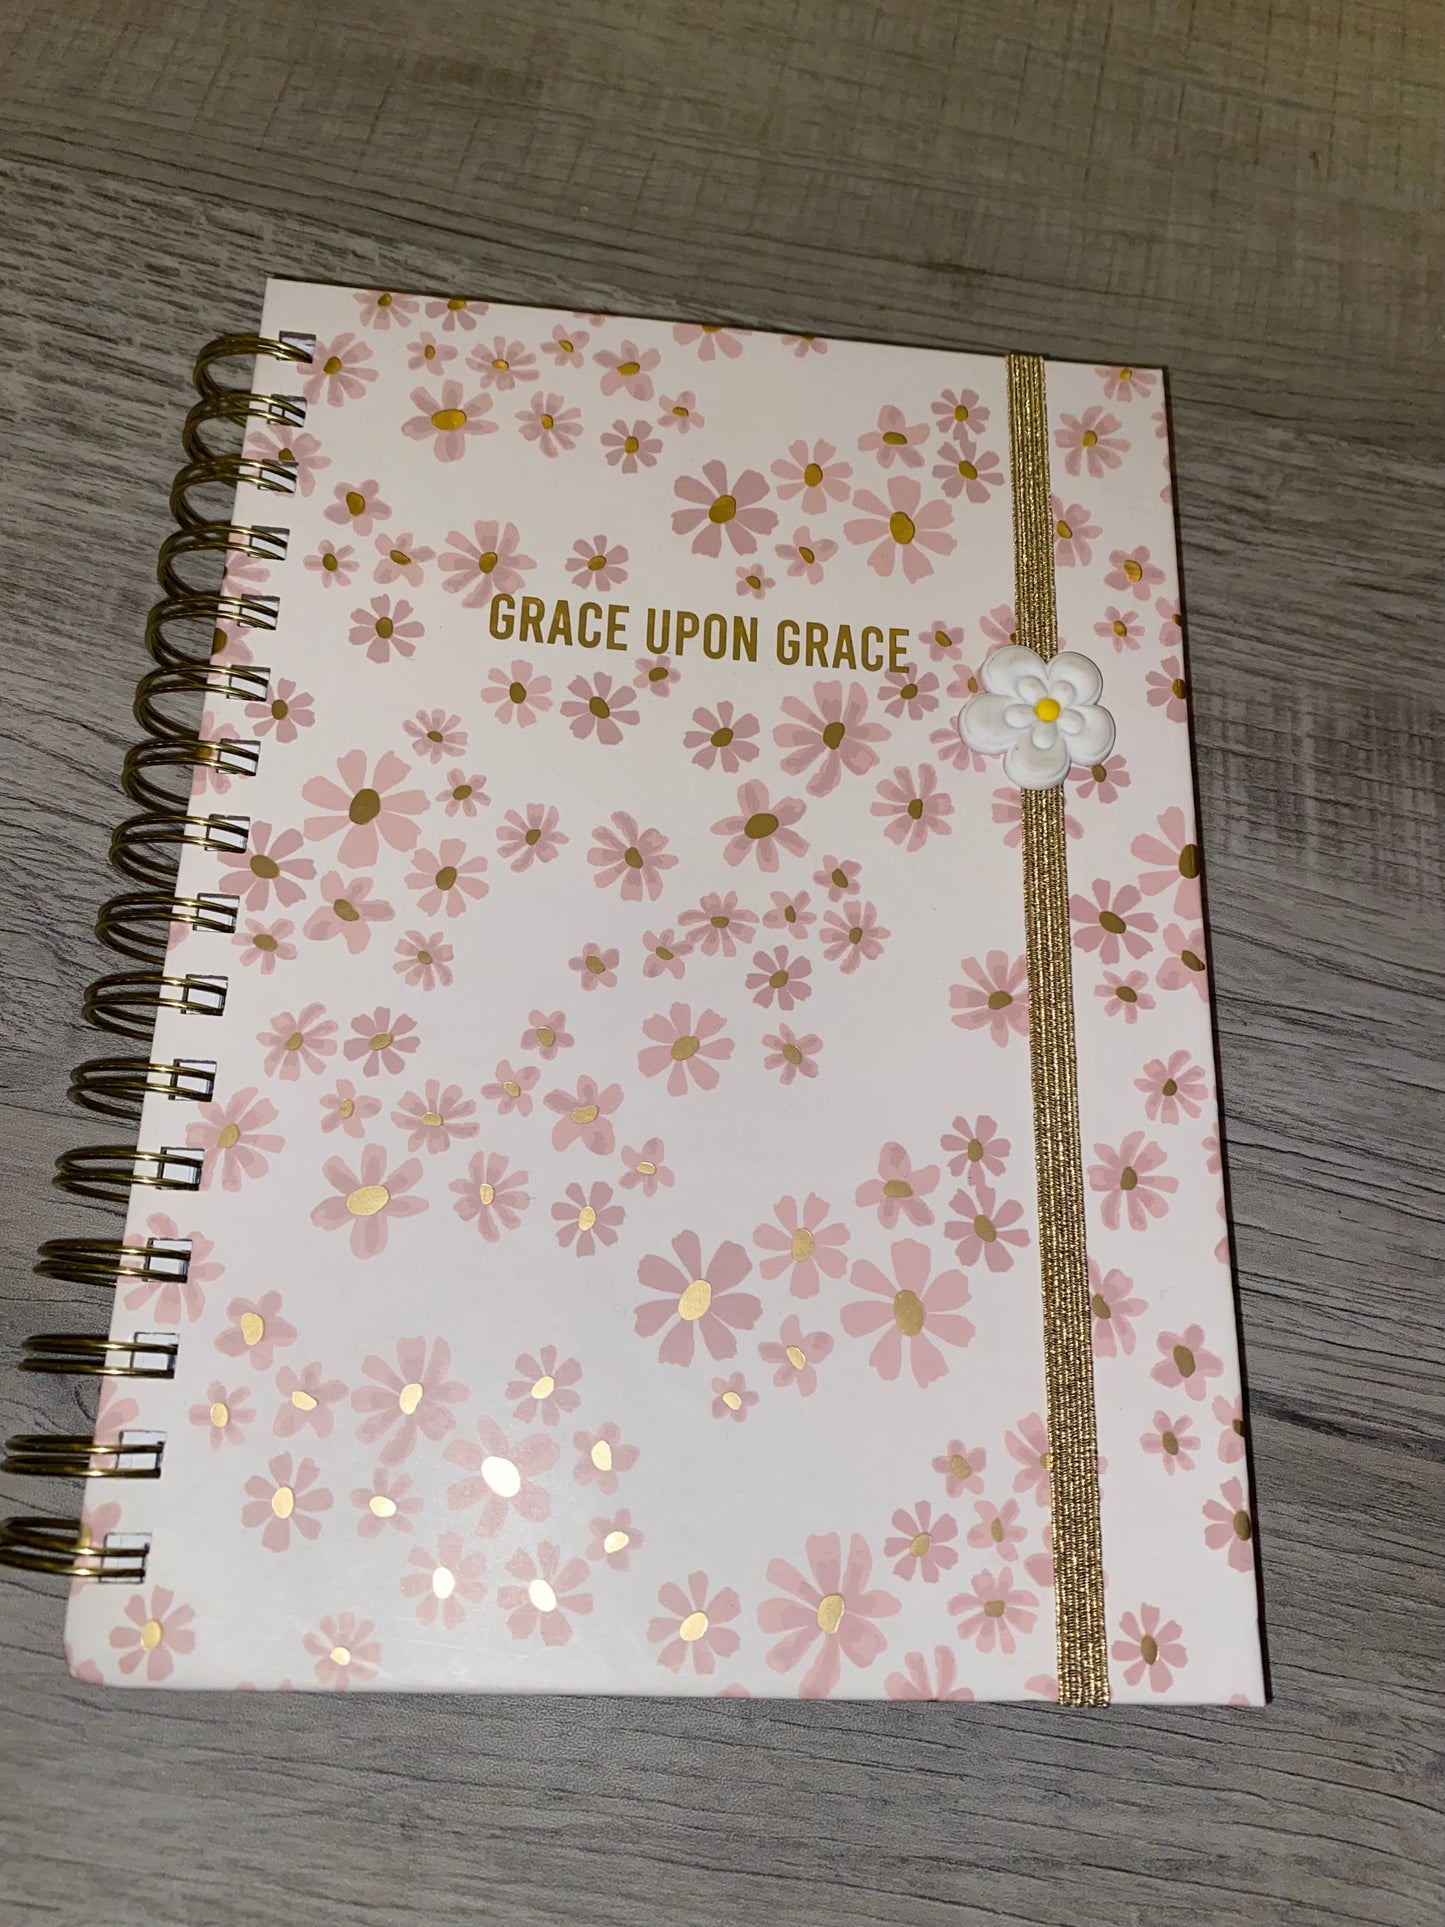 Grace upon Grace journal